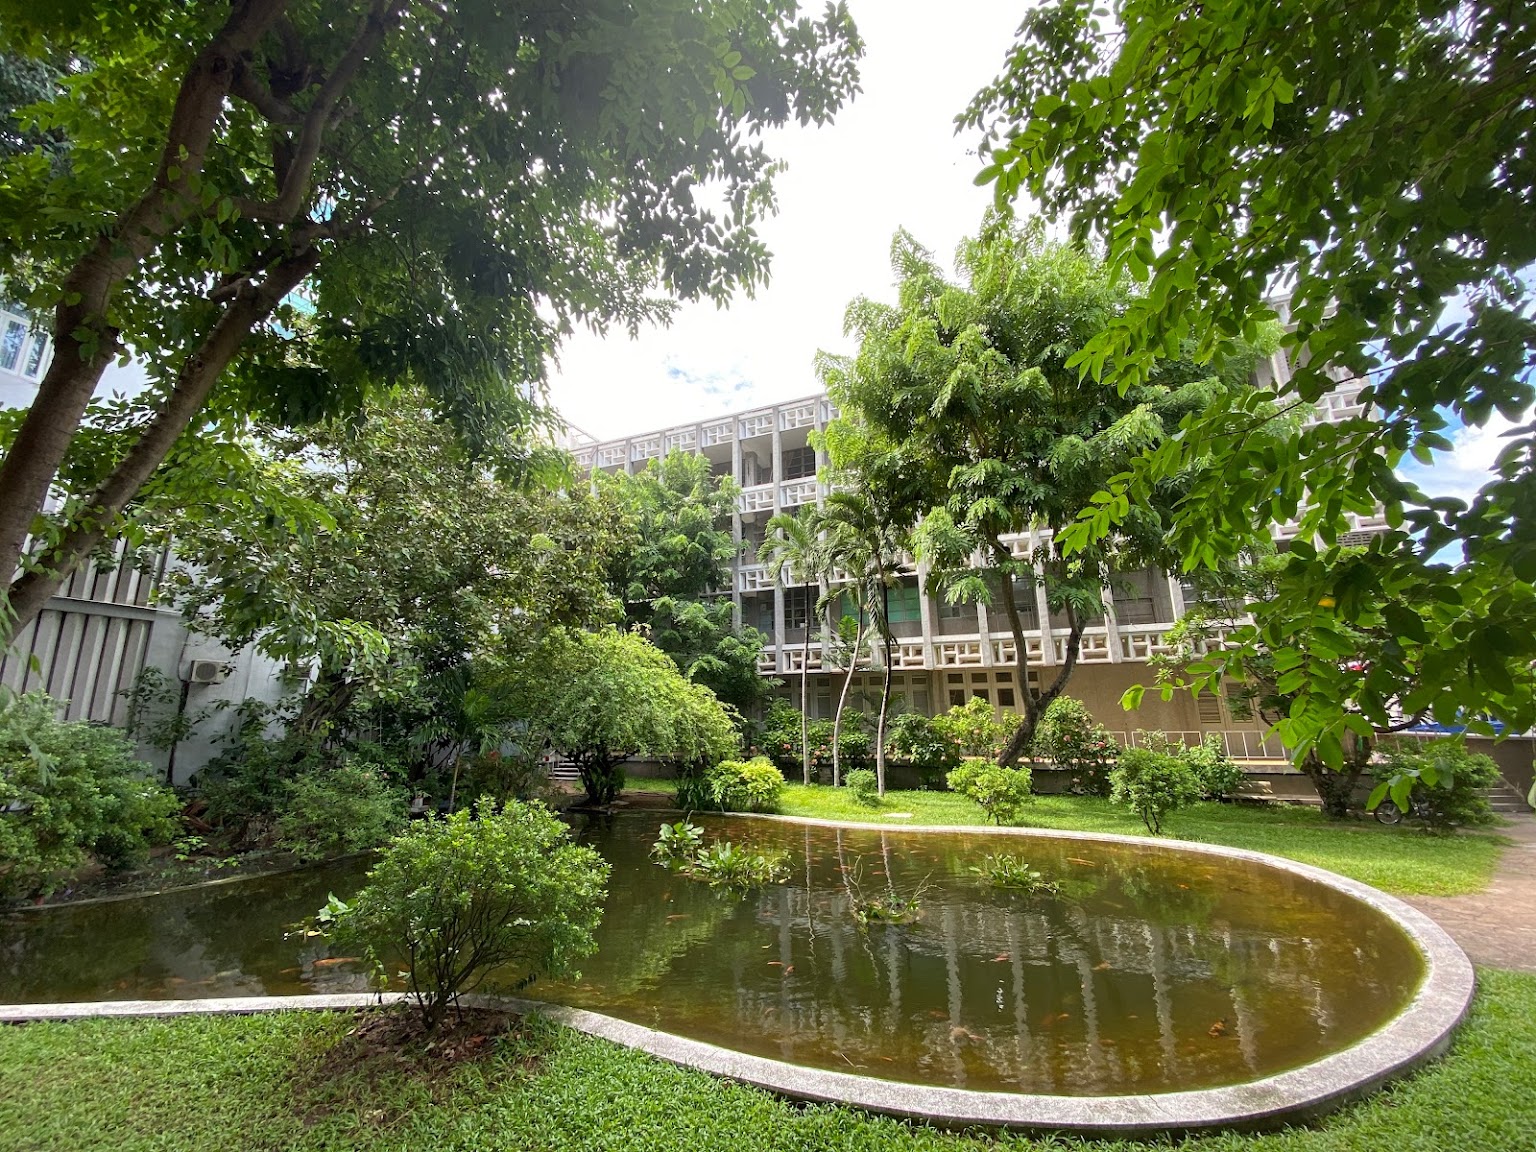 University of Medicine and Pharmacy at Ho Chi Minh City